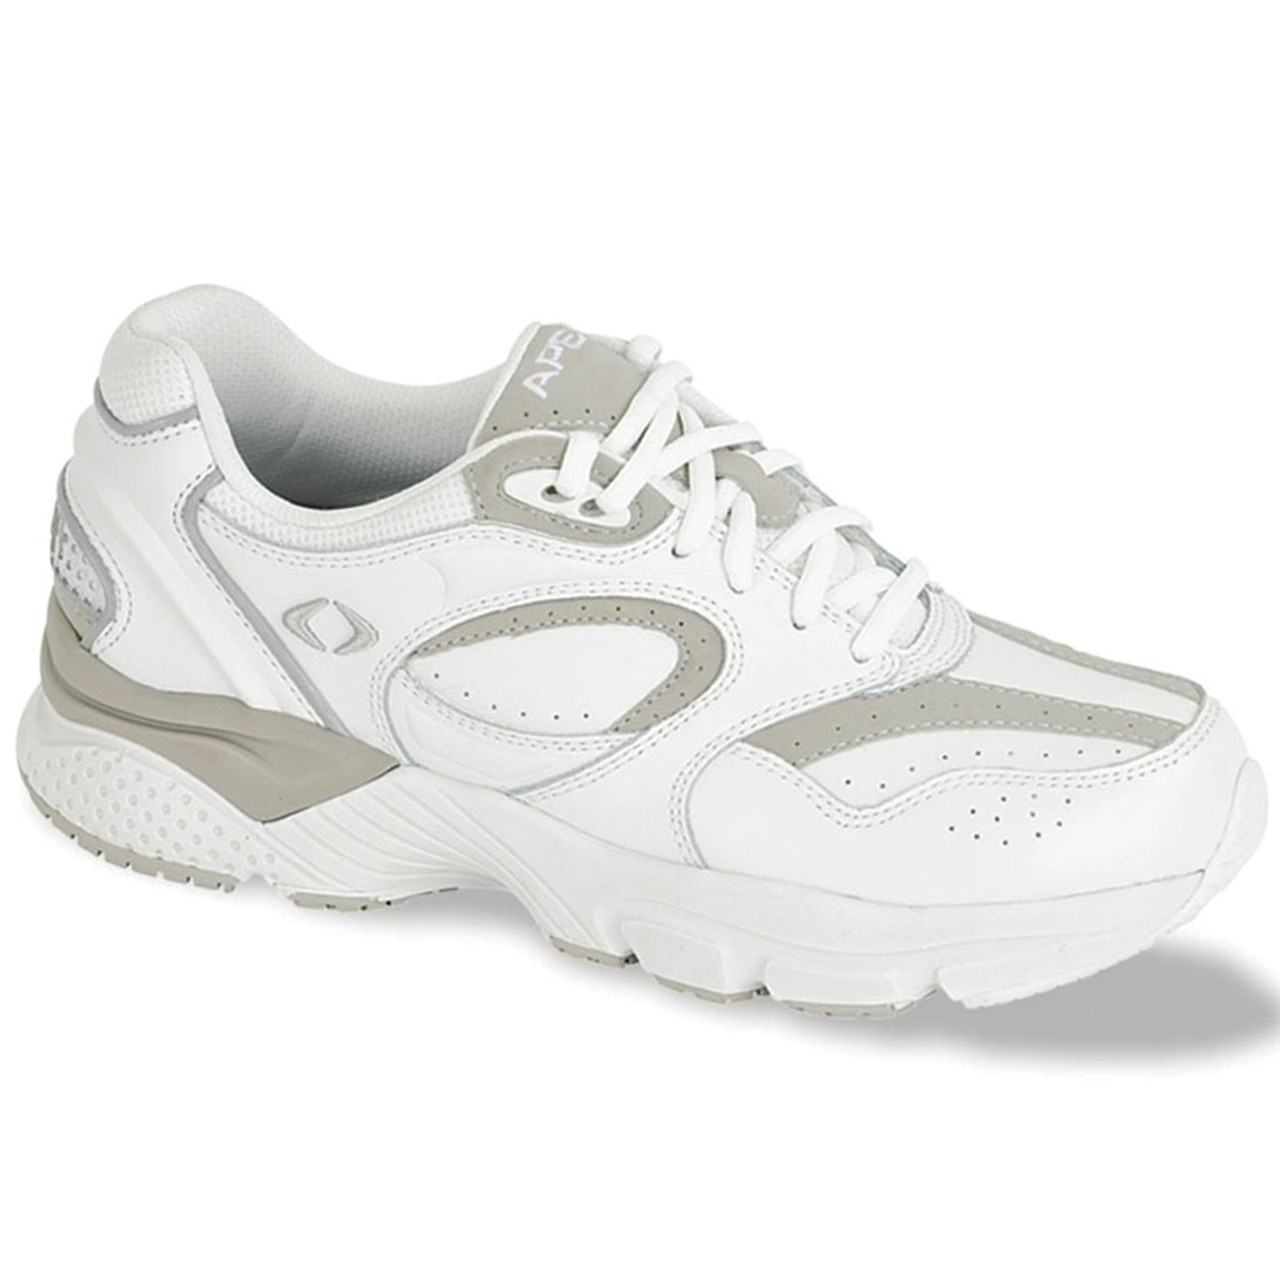 Aetrex X821 Men's Walker Shoe - Lenex - White/Beige - Orthotic Shop